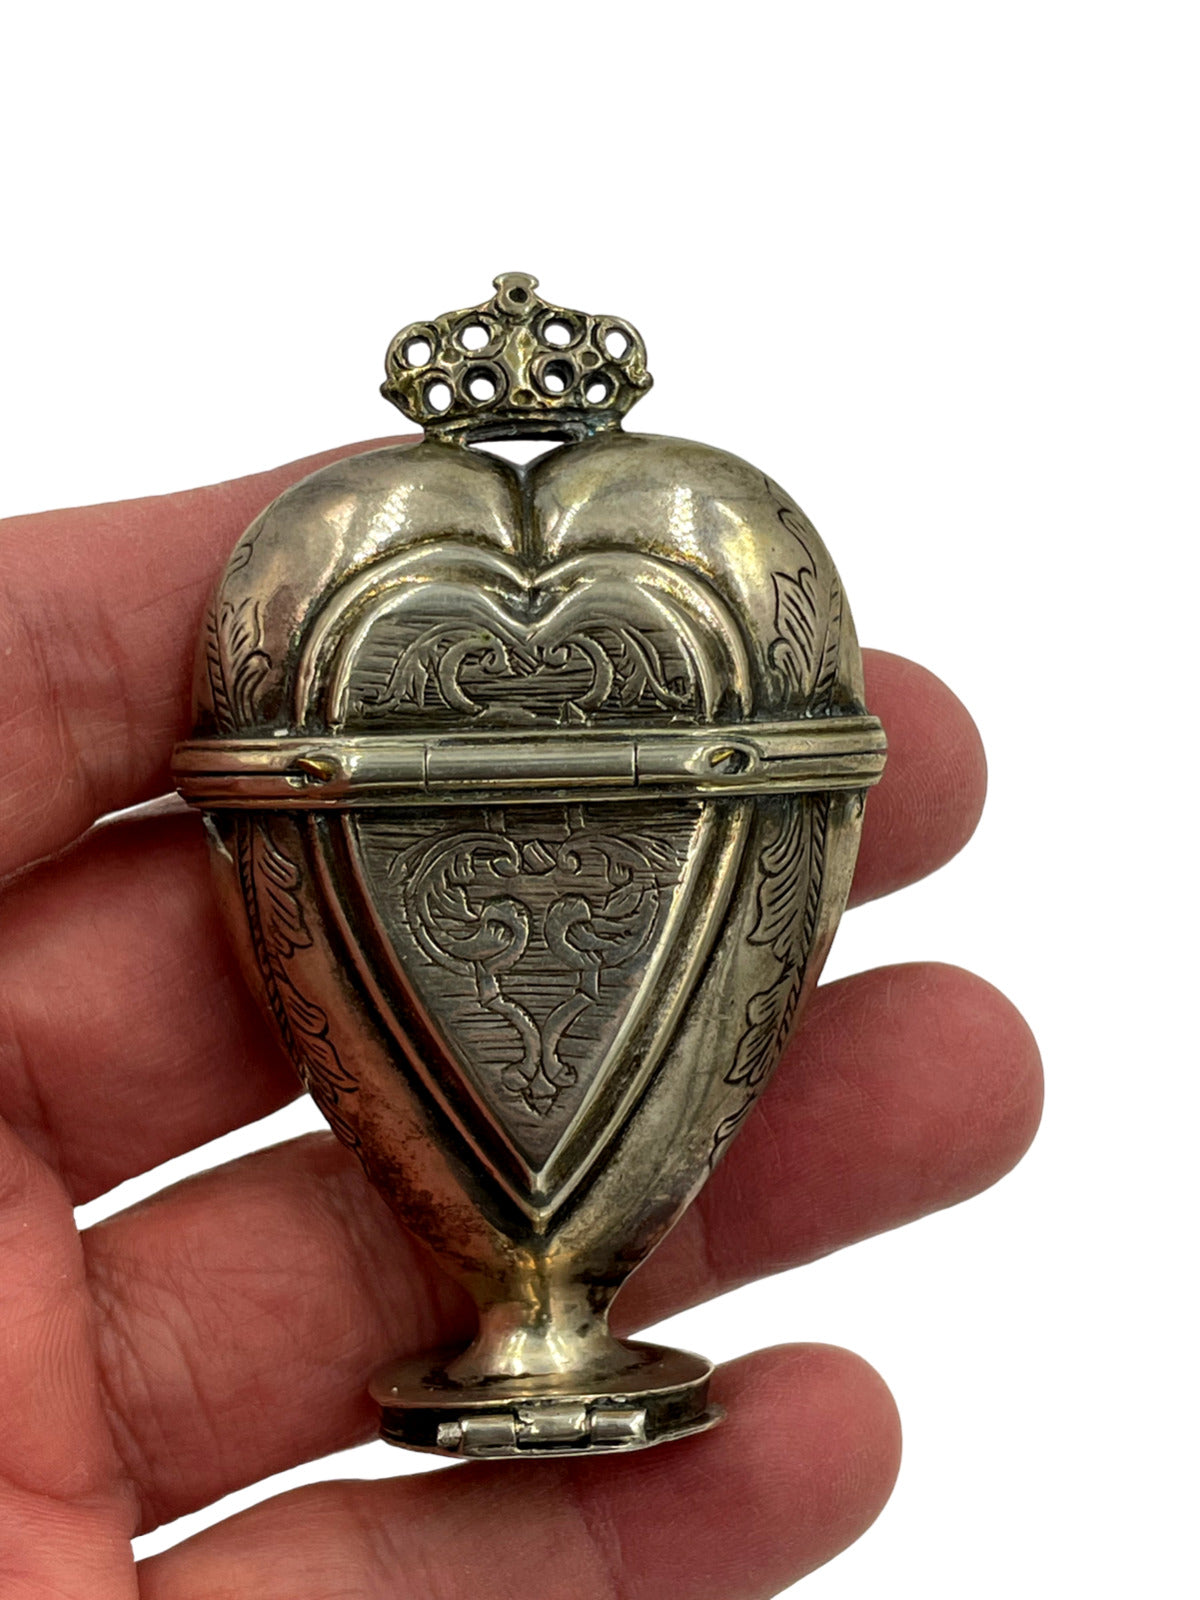 Scandinavian Solid Silver and Gilded Heart-Shaped Vinaigrette or Hovedvandsaeg